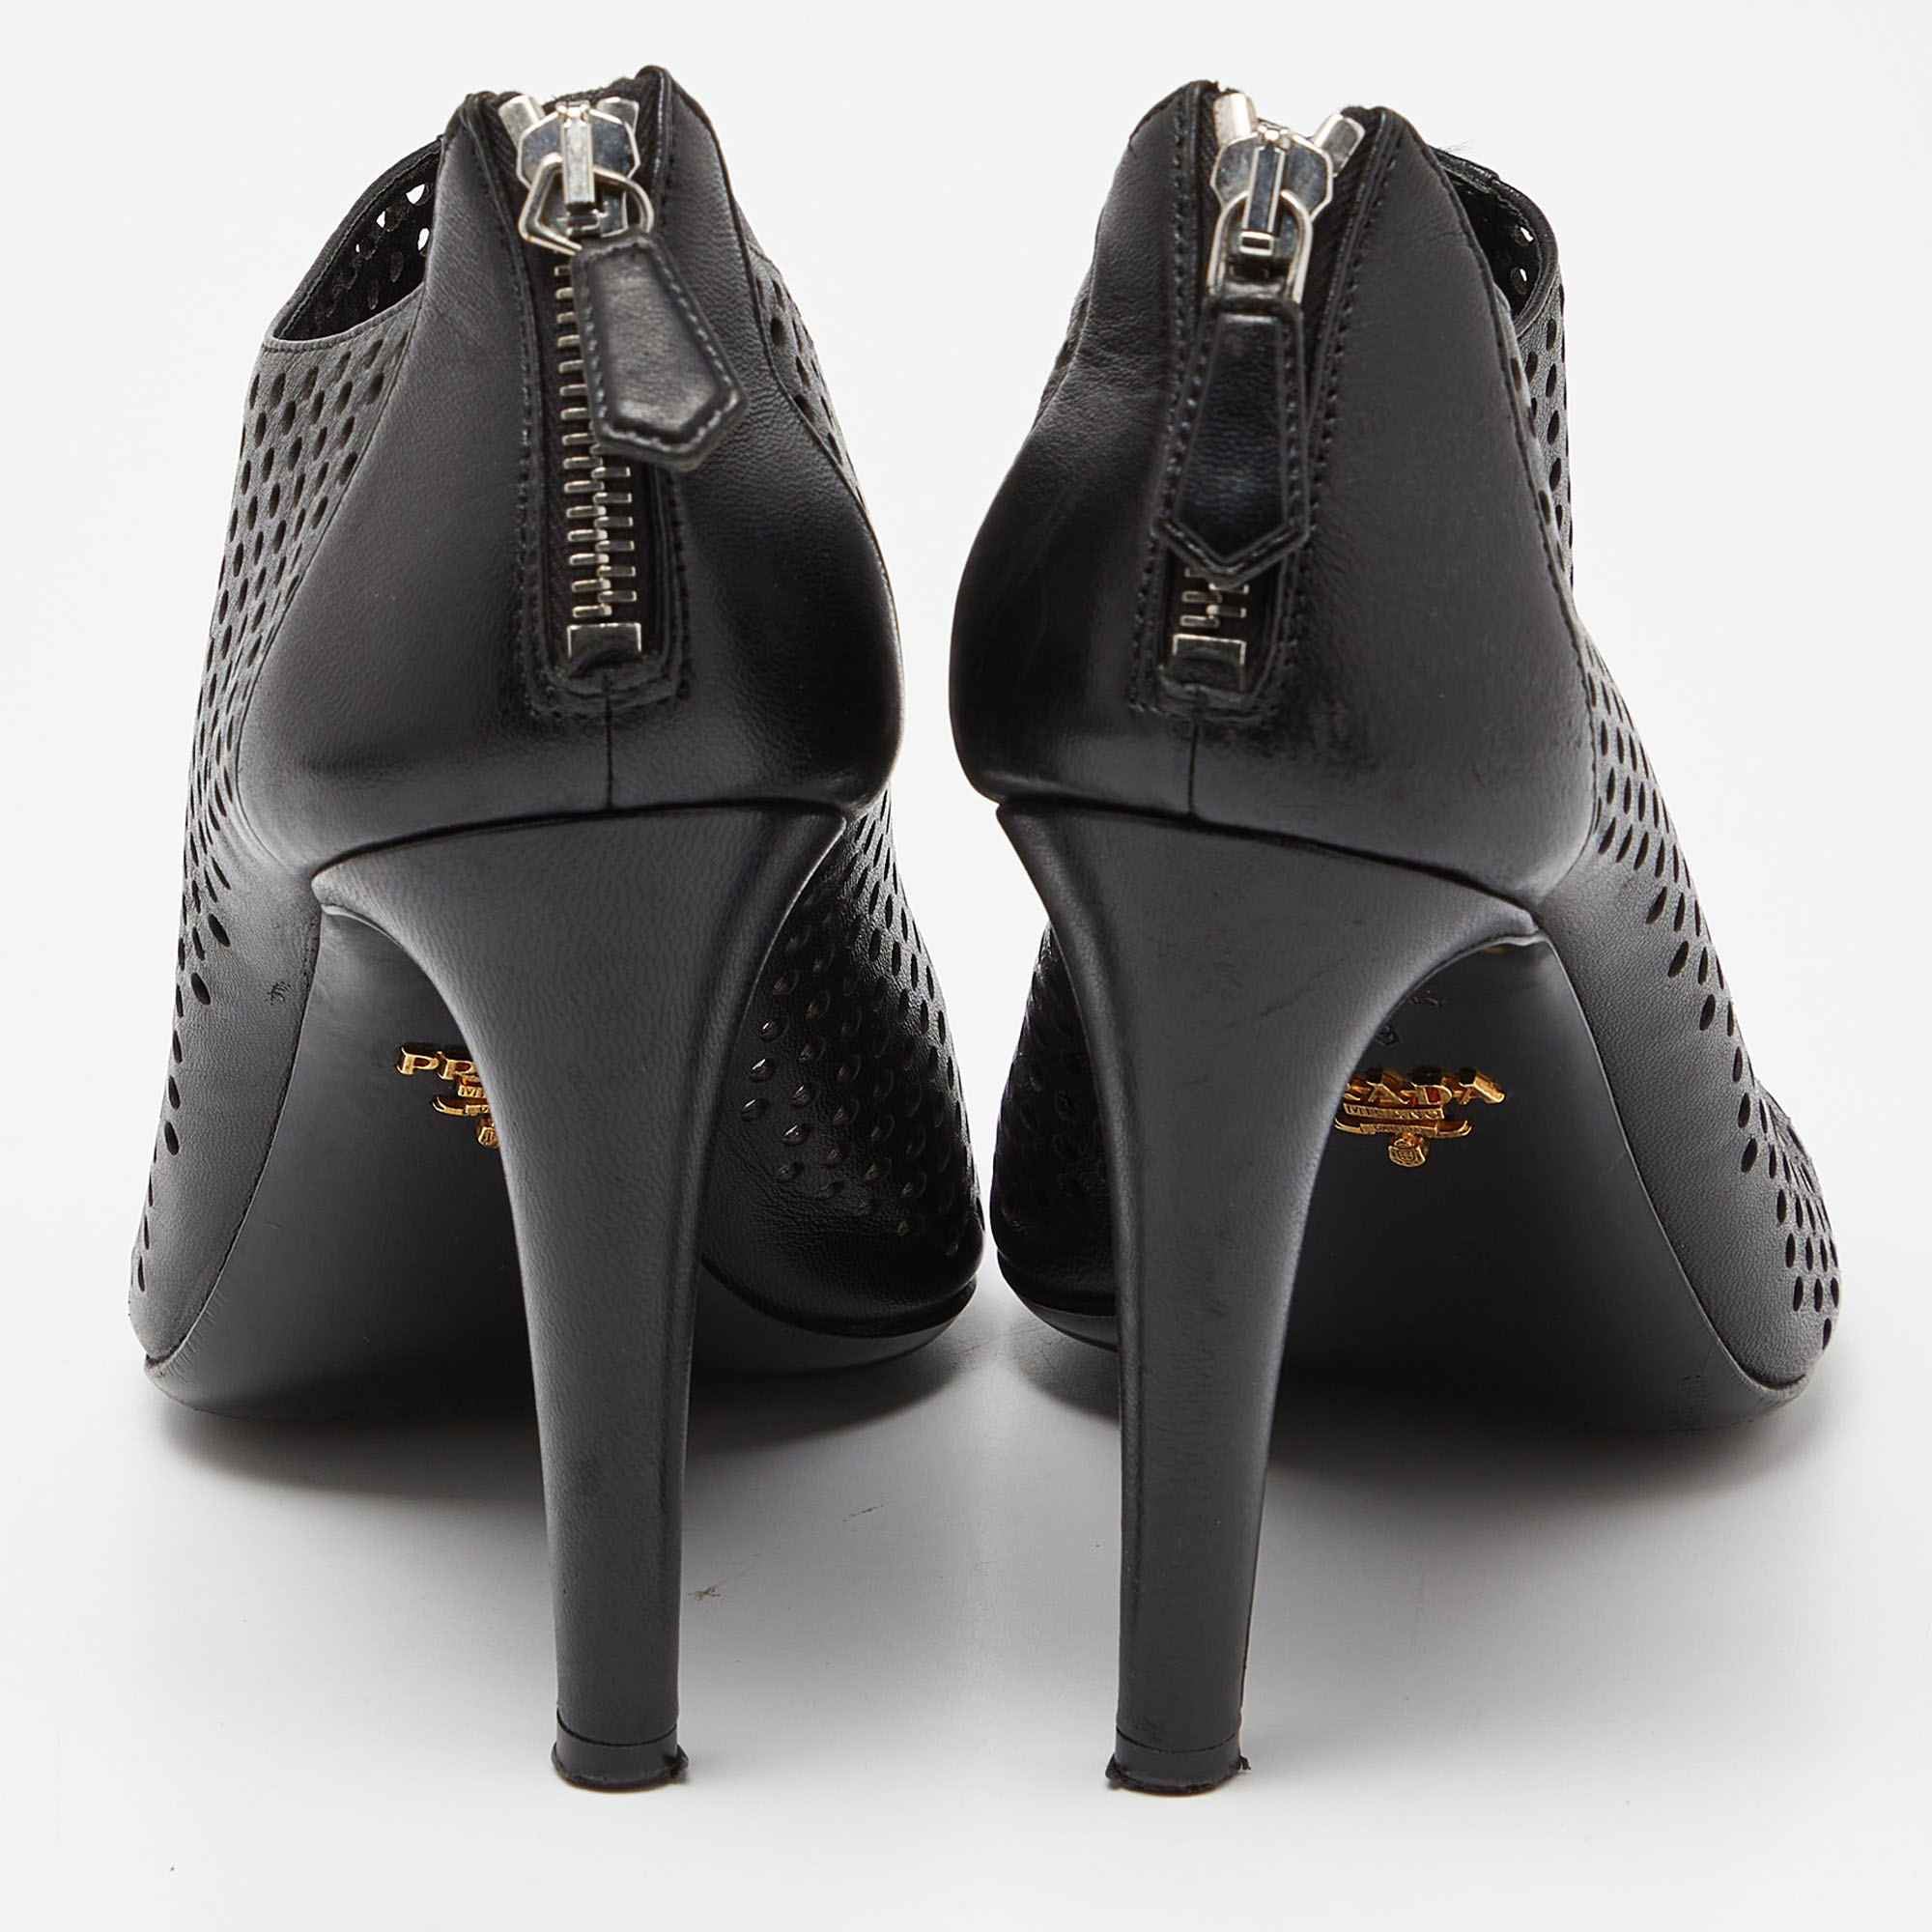 Prada Black Perforated Leather Peep Toe Ankle Booties Size 39